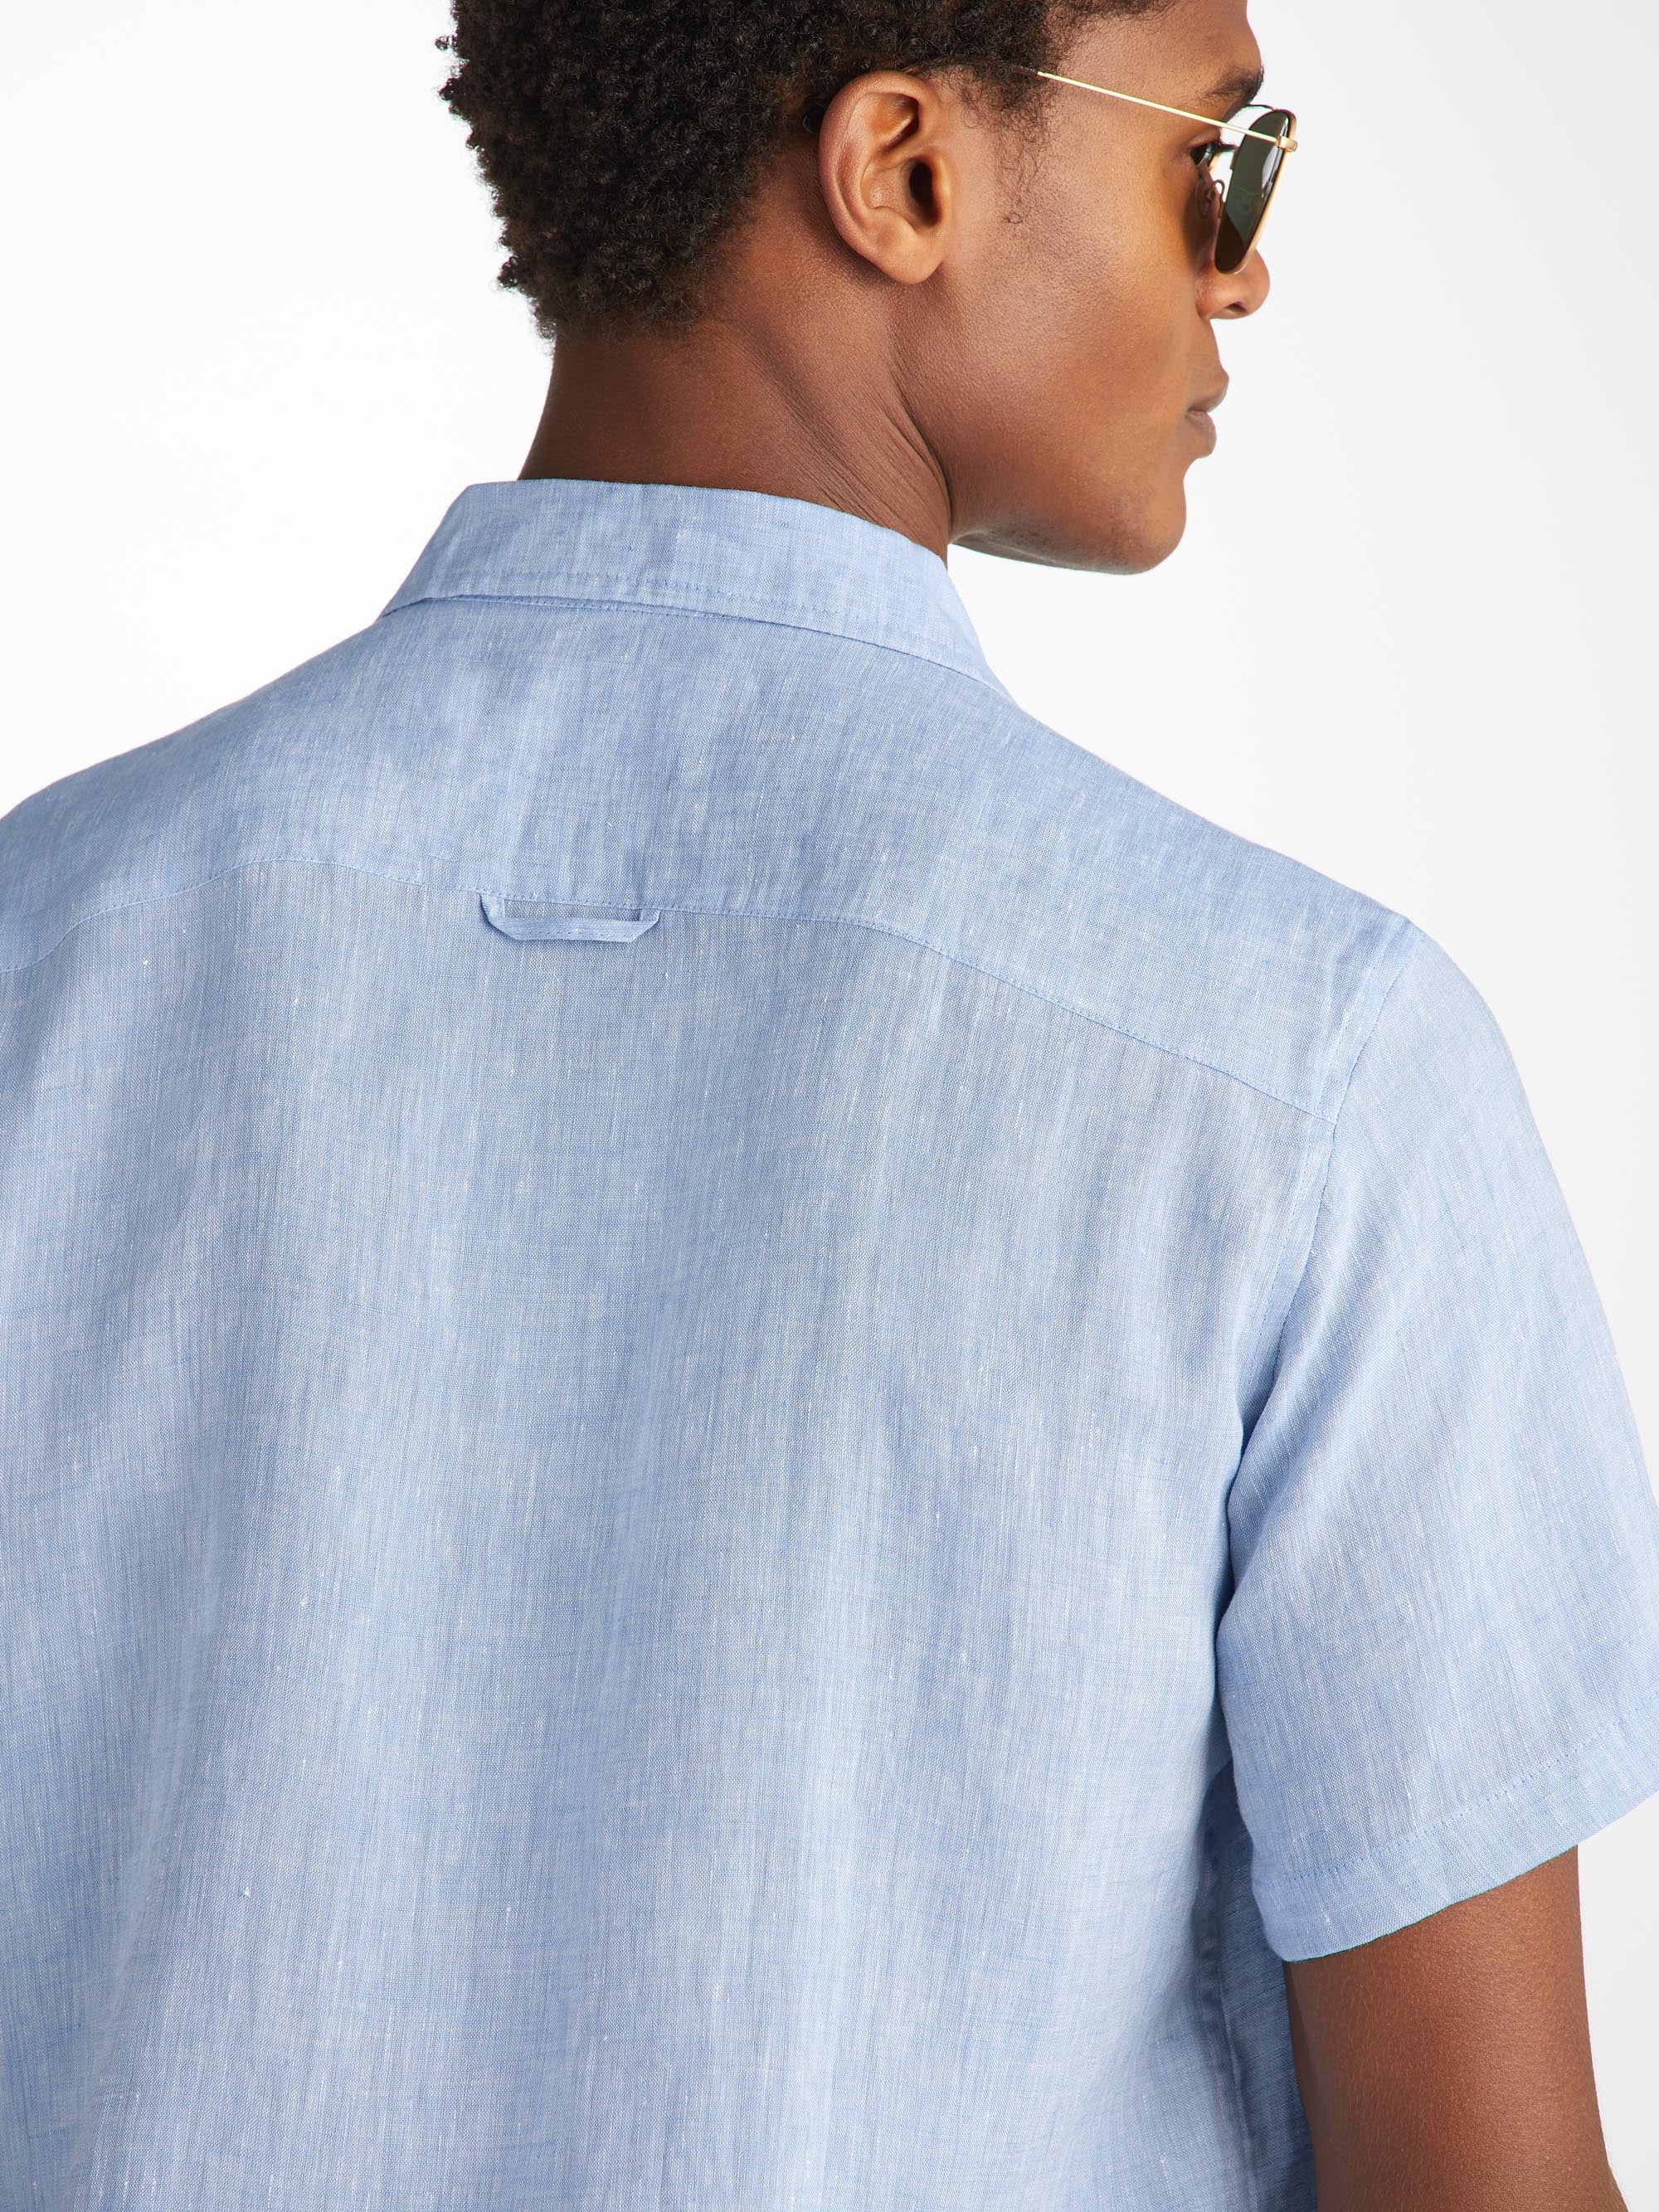 Men's Short Sleeve Shirt Monaco Linen Blue